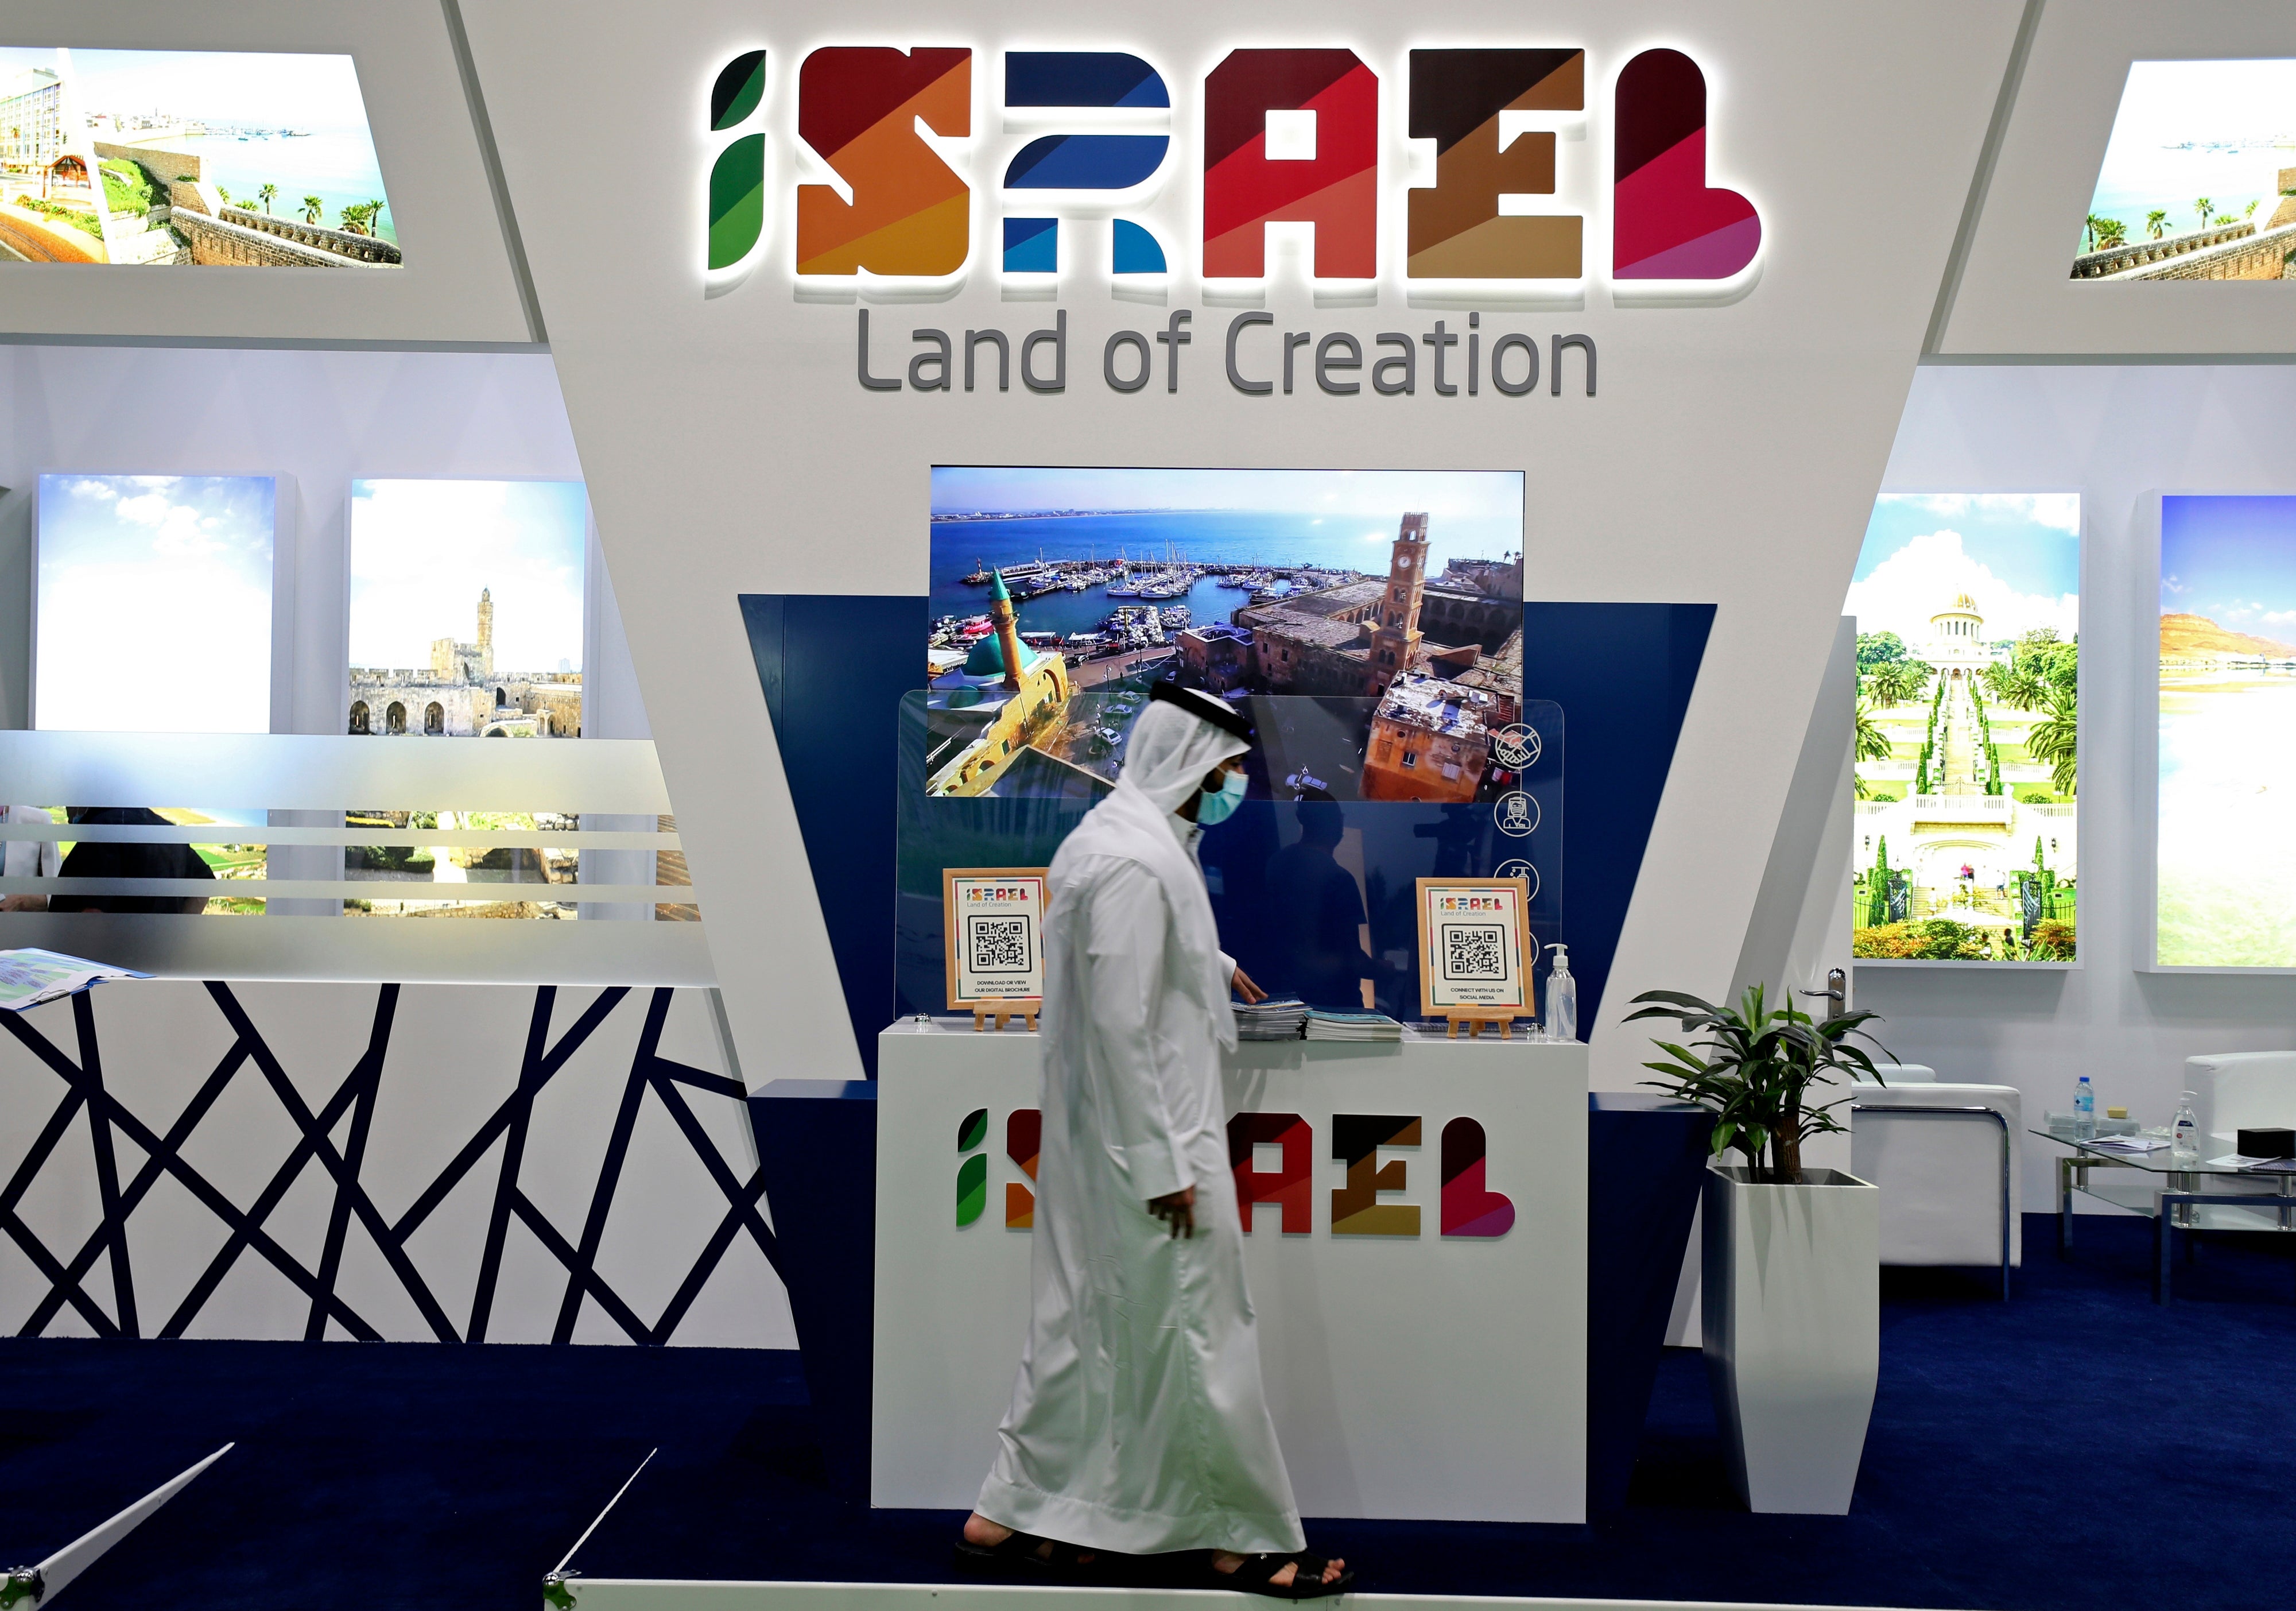 Emirates Israel Tourism